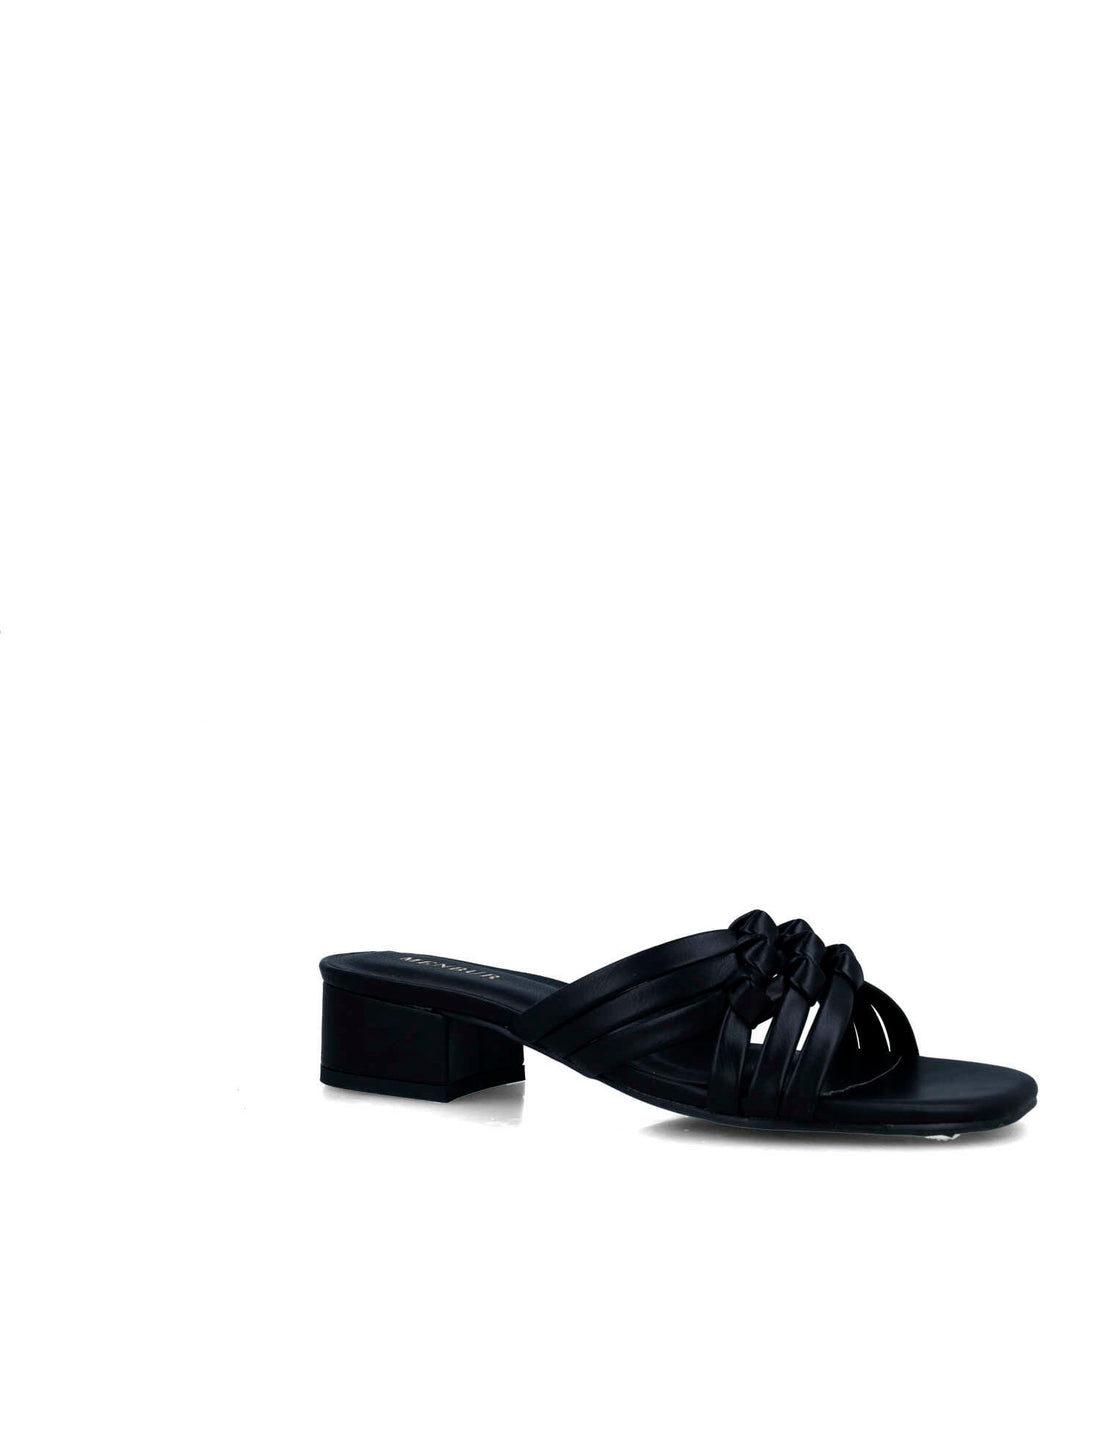 Black Slippers With Kitten Heel_25568_01_02